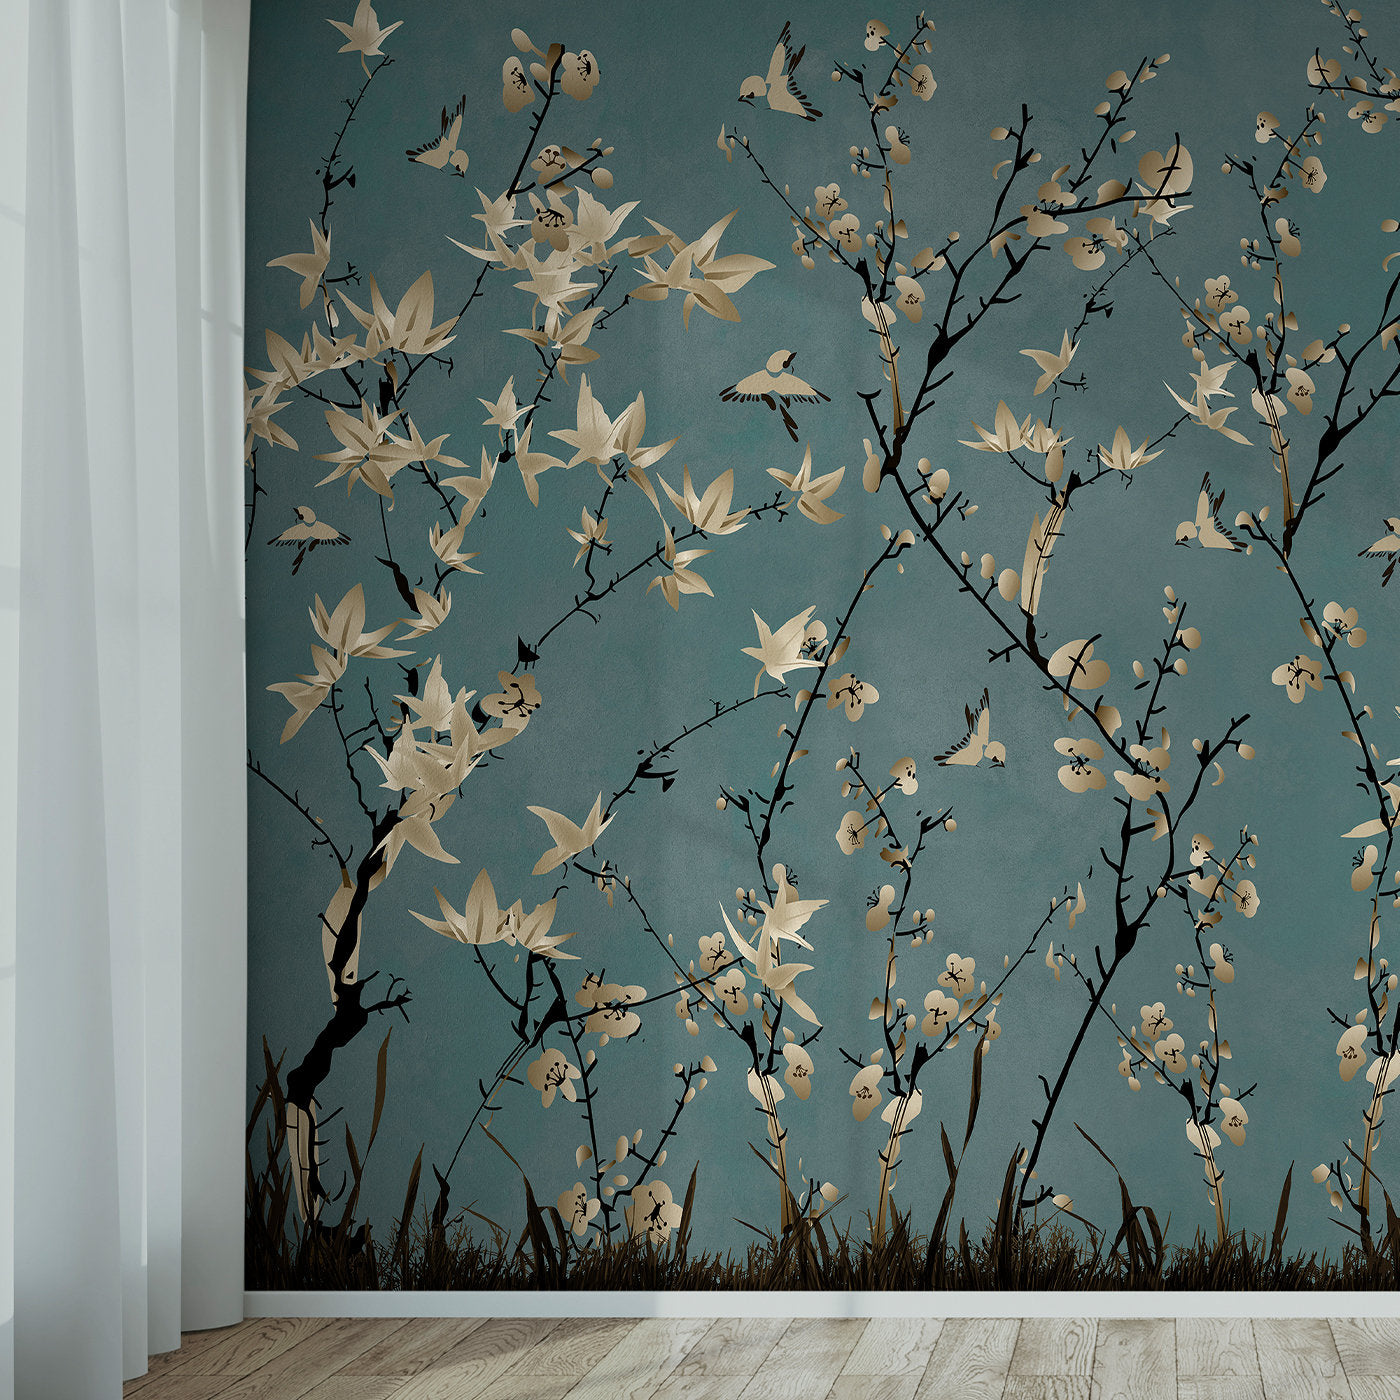 golden leaves textured wallpaper - Alternative view 1